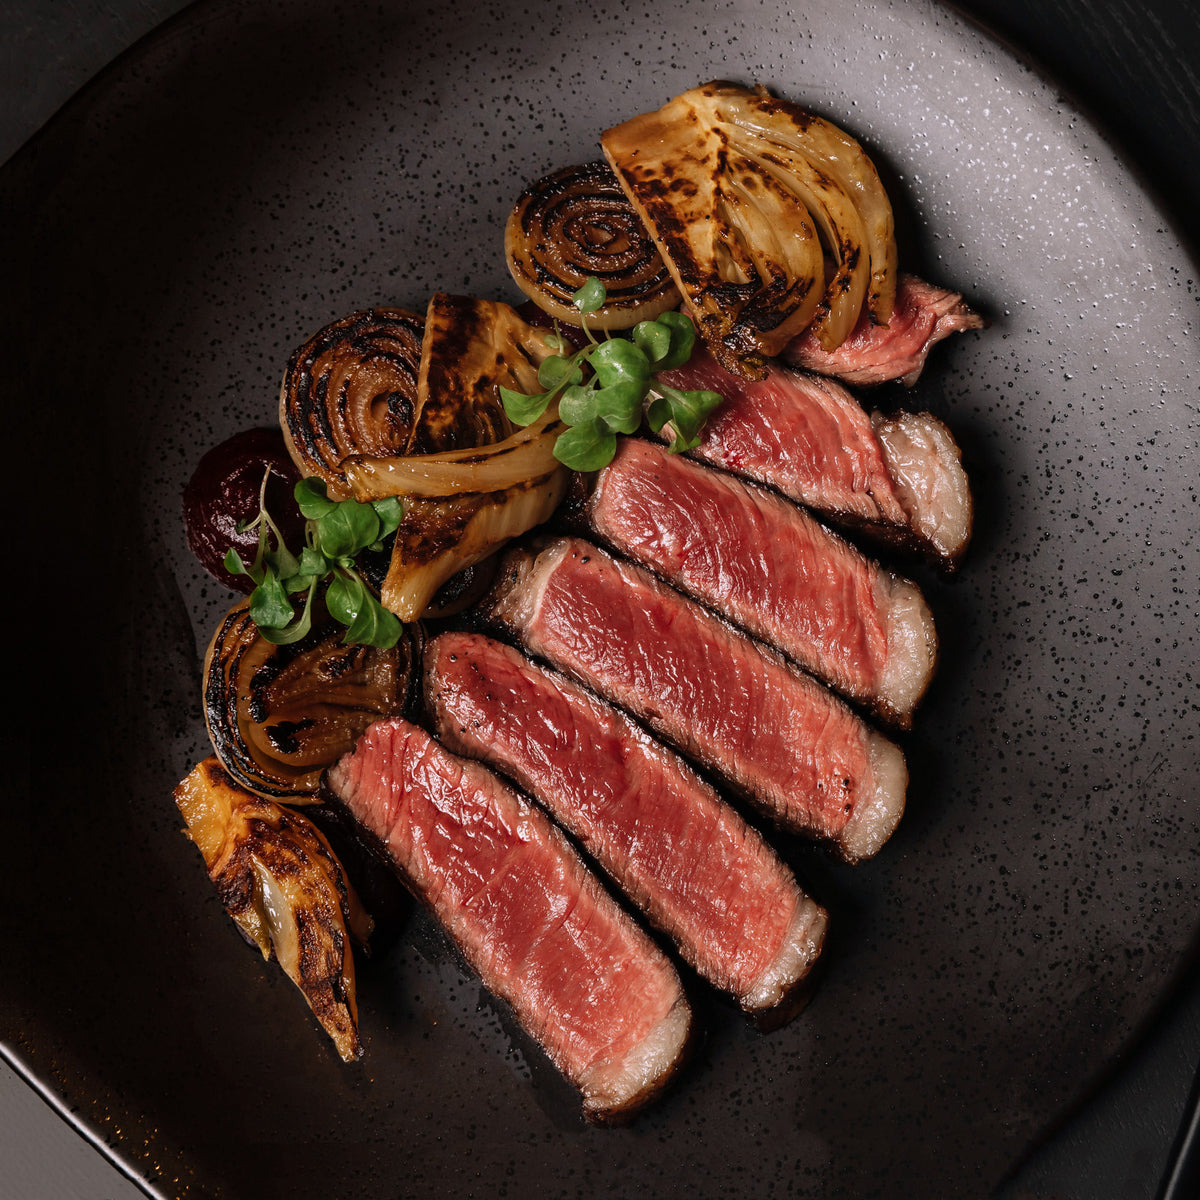 Premium Grain-Fed Beef MB5+ Striploin Steak from Australia (200g) - Horizon Farms